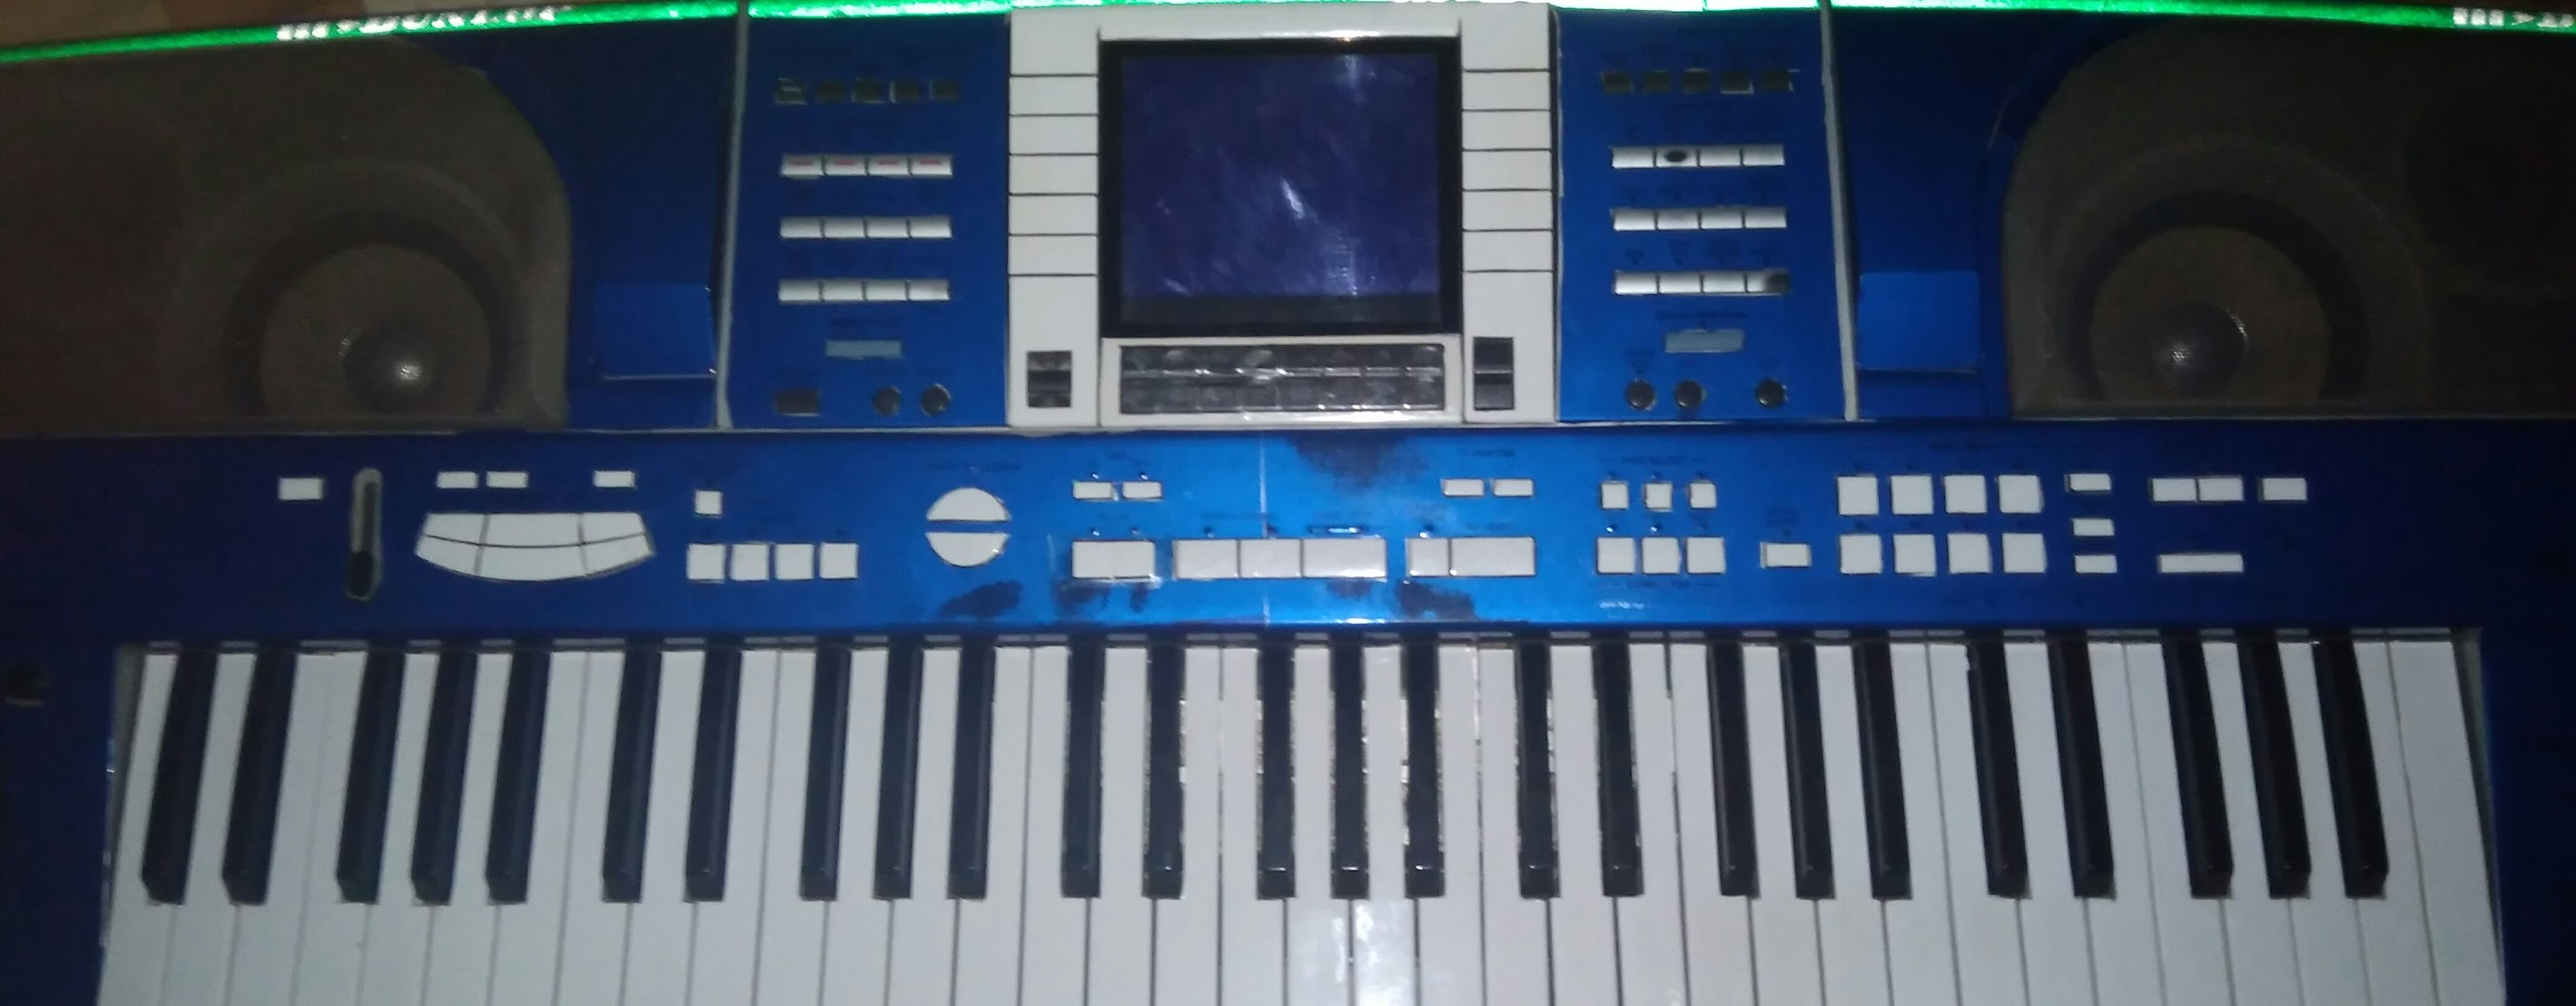 tutorial recording sample wav keyboard technics kn2400